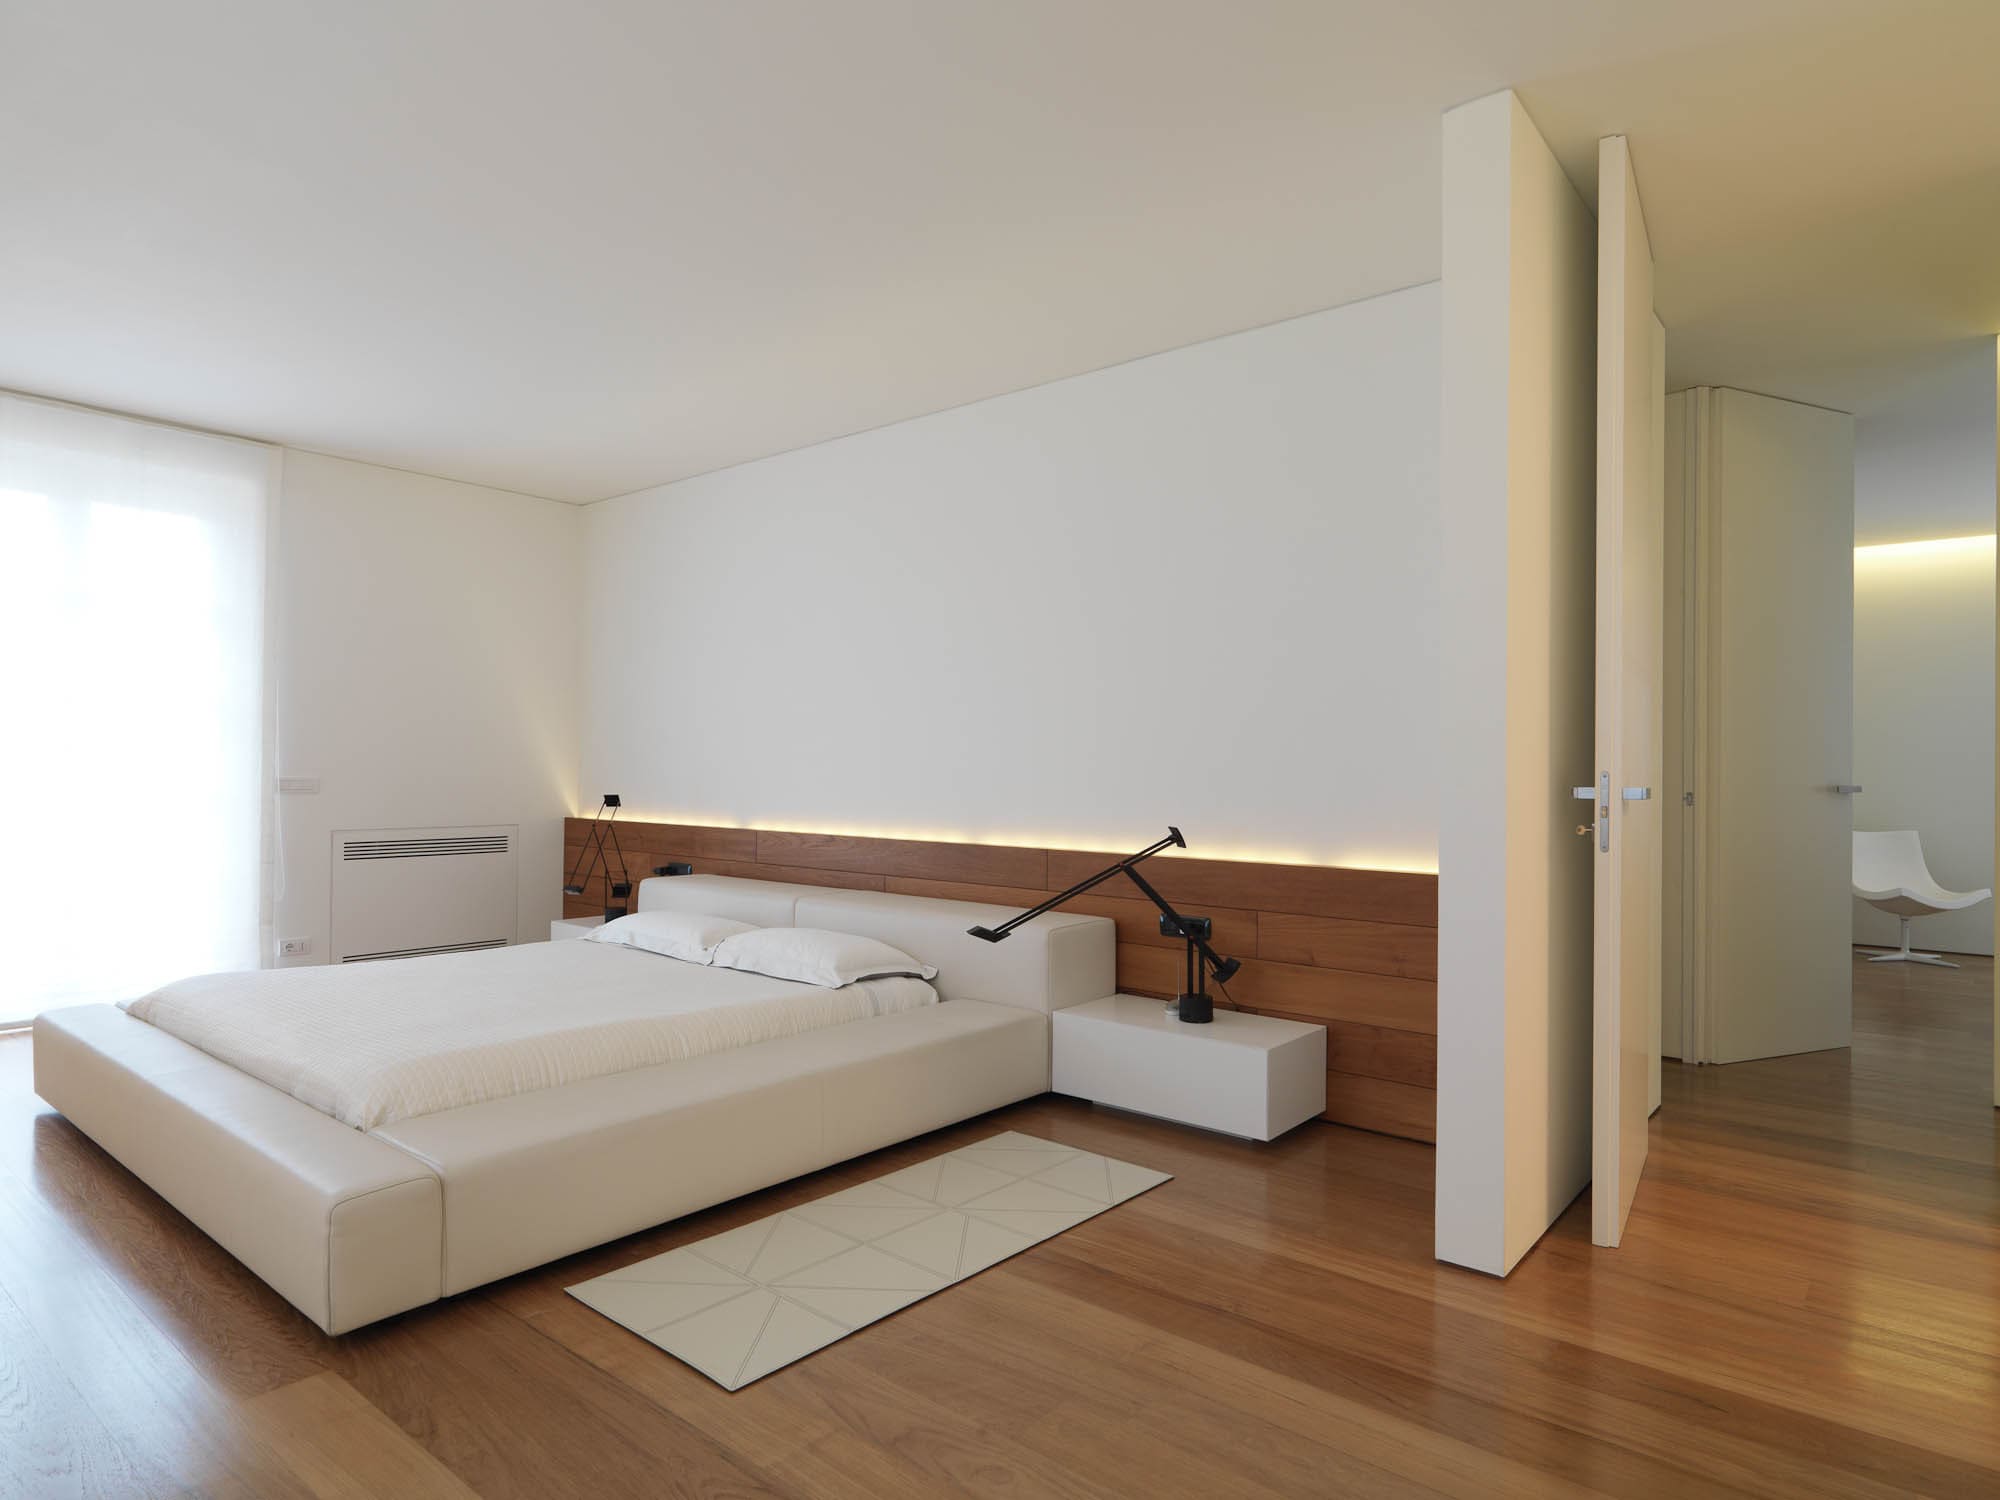 Mobles de dormitori minimalistes